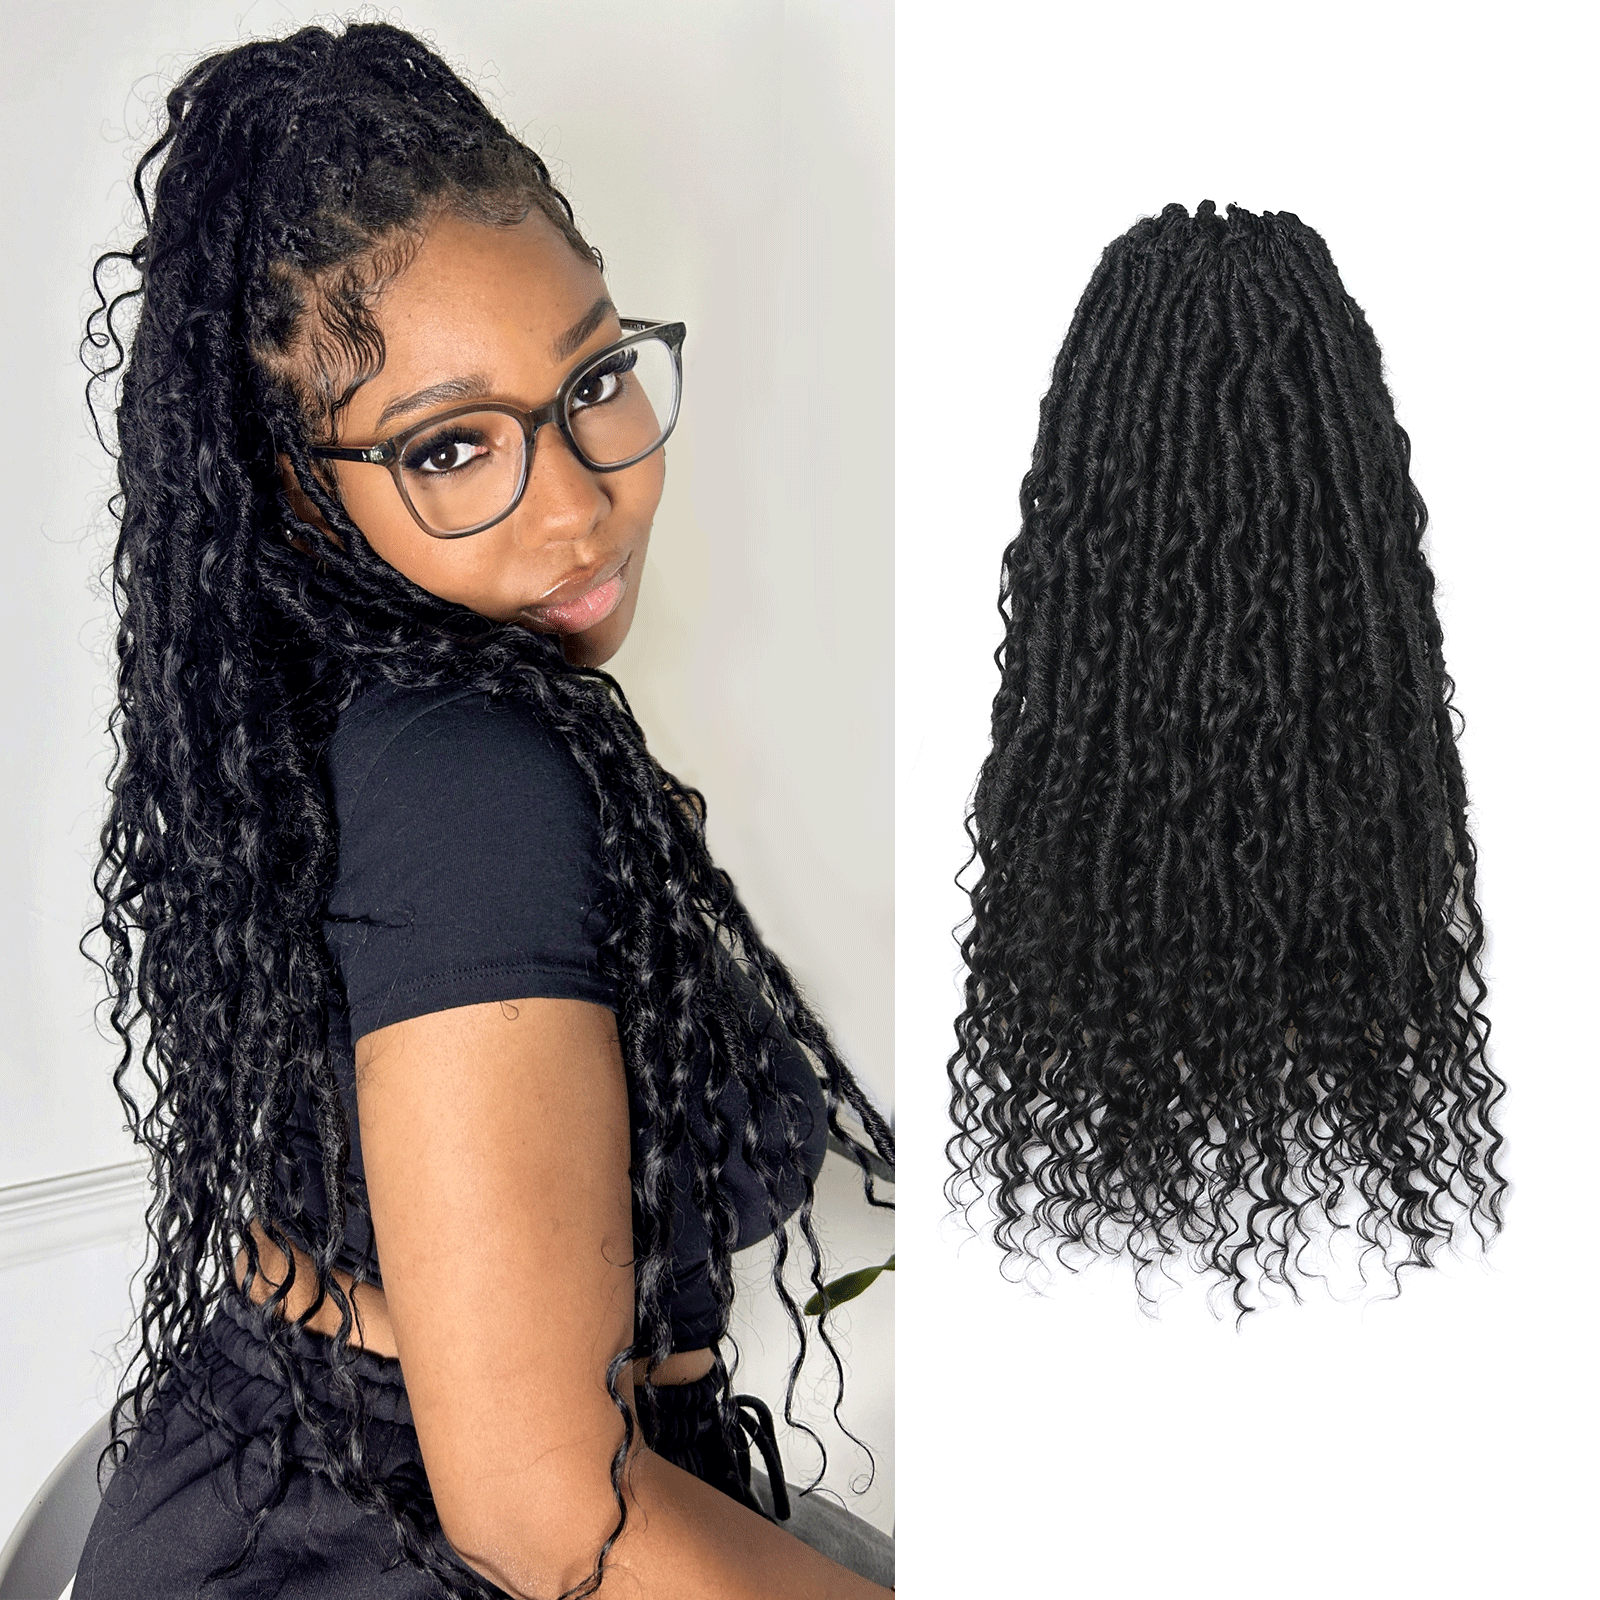 Toyotress Crochet Boho Locs Braiding Hair With Human Hair Curls 8 Packs | Pre Looped Goddess Boho Dreadlocks Curly Full Ends Hair Extensions